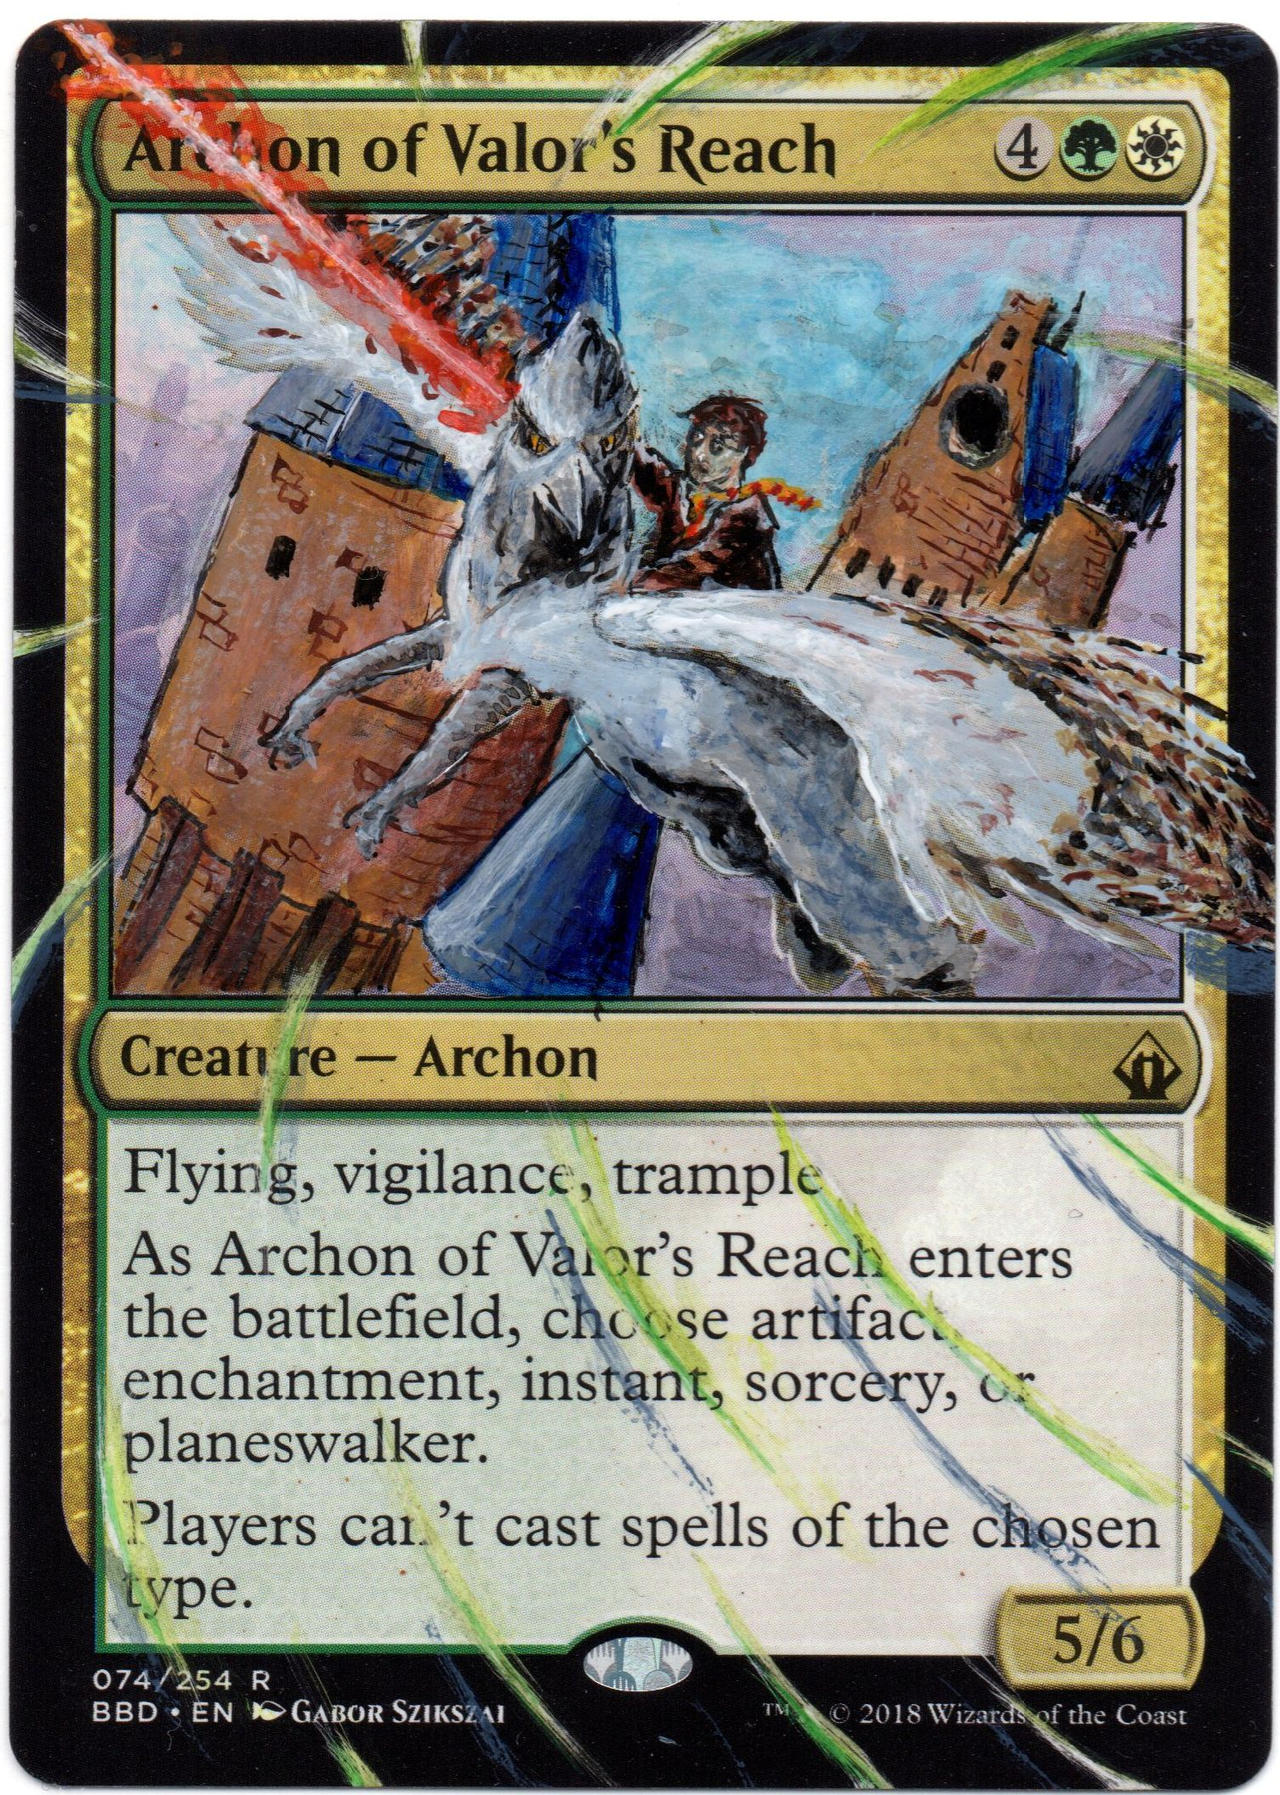 Alteration 040 - Archon of Valor's Reach - by pbourumeau DeviantArt